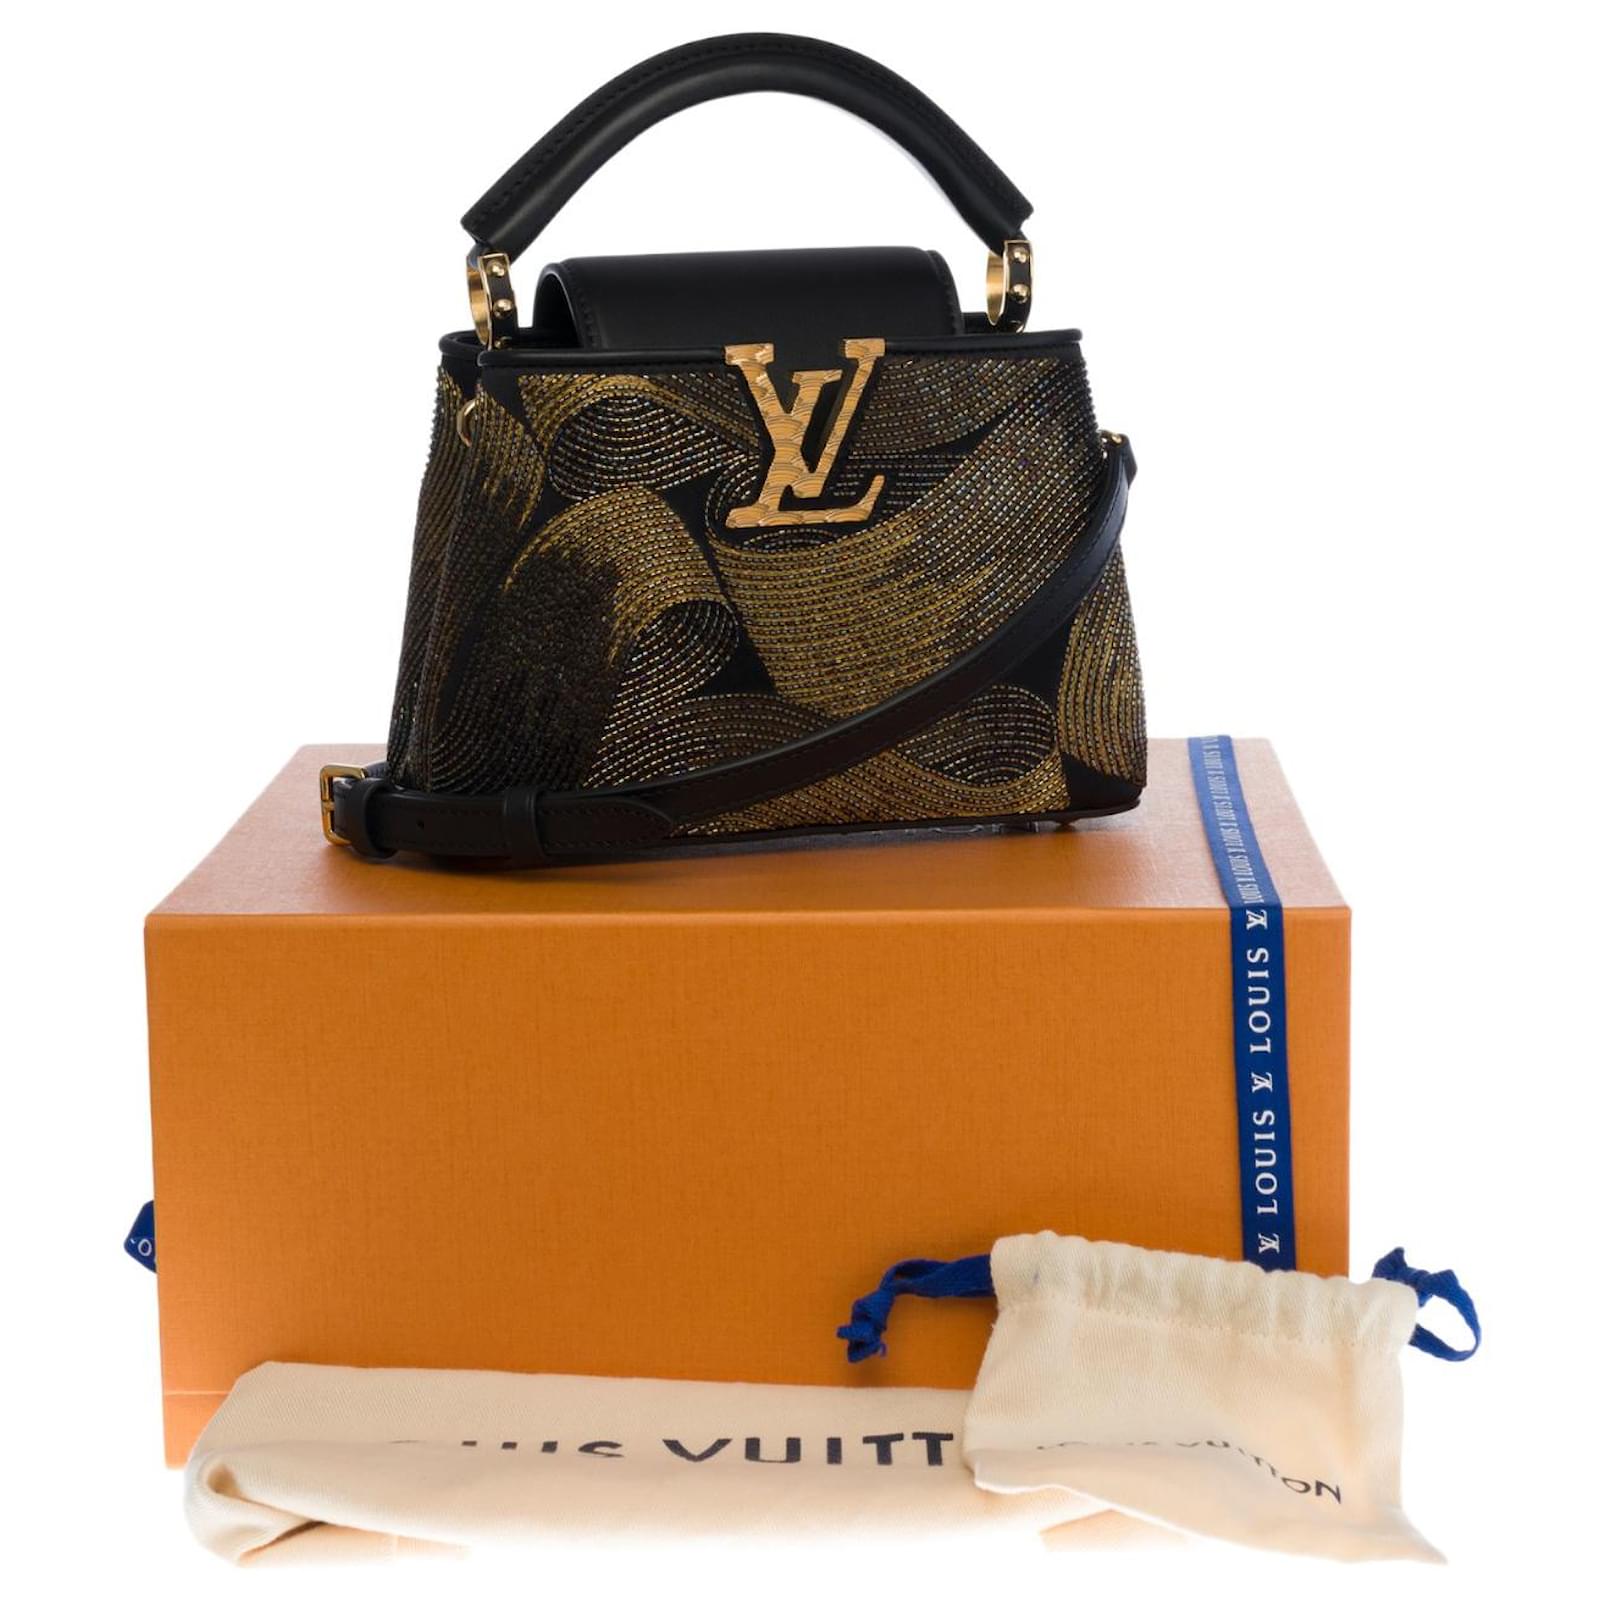 Spotted: Louis Vuitton's Capucines bag on Disney's Cruella